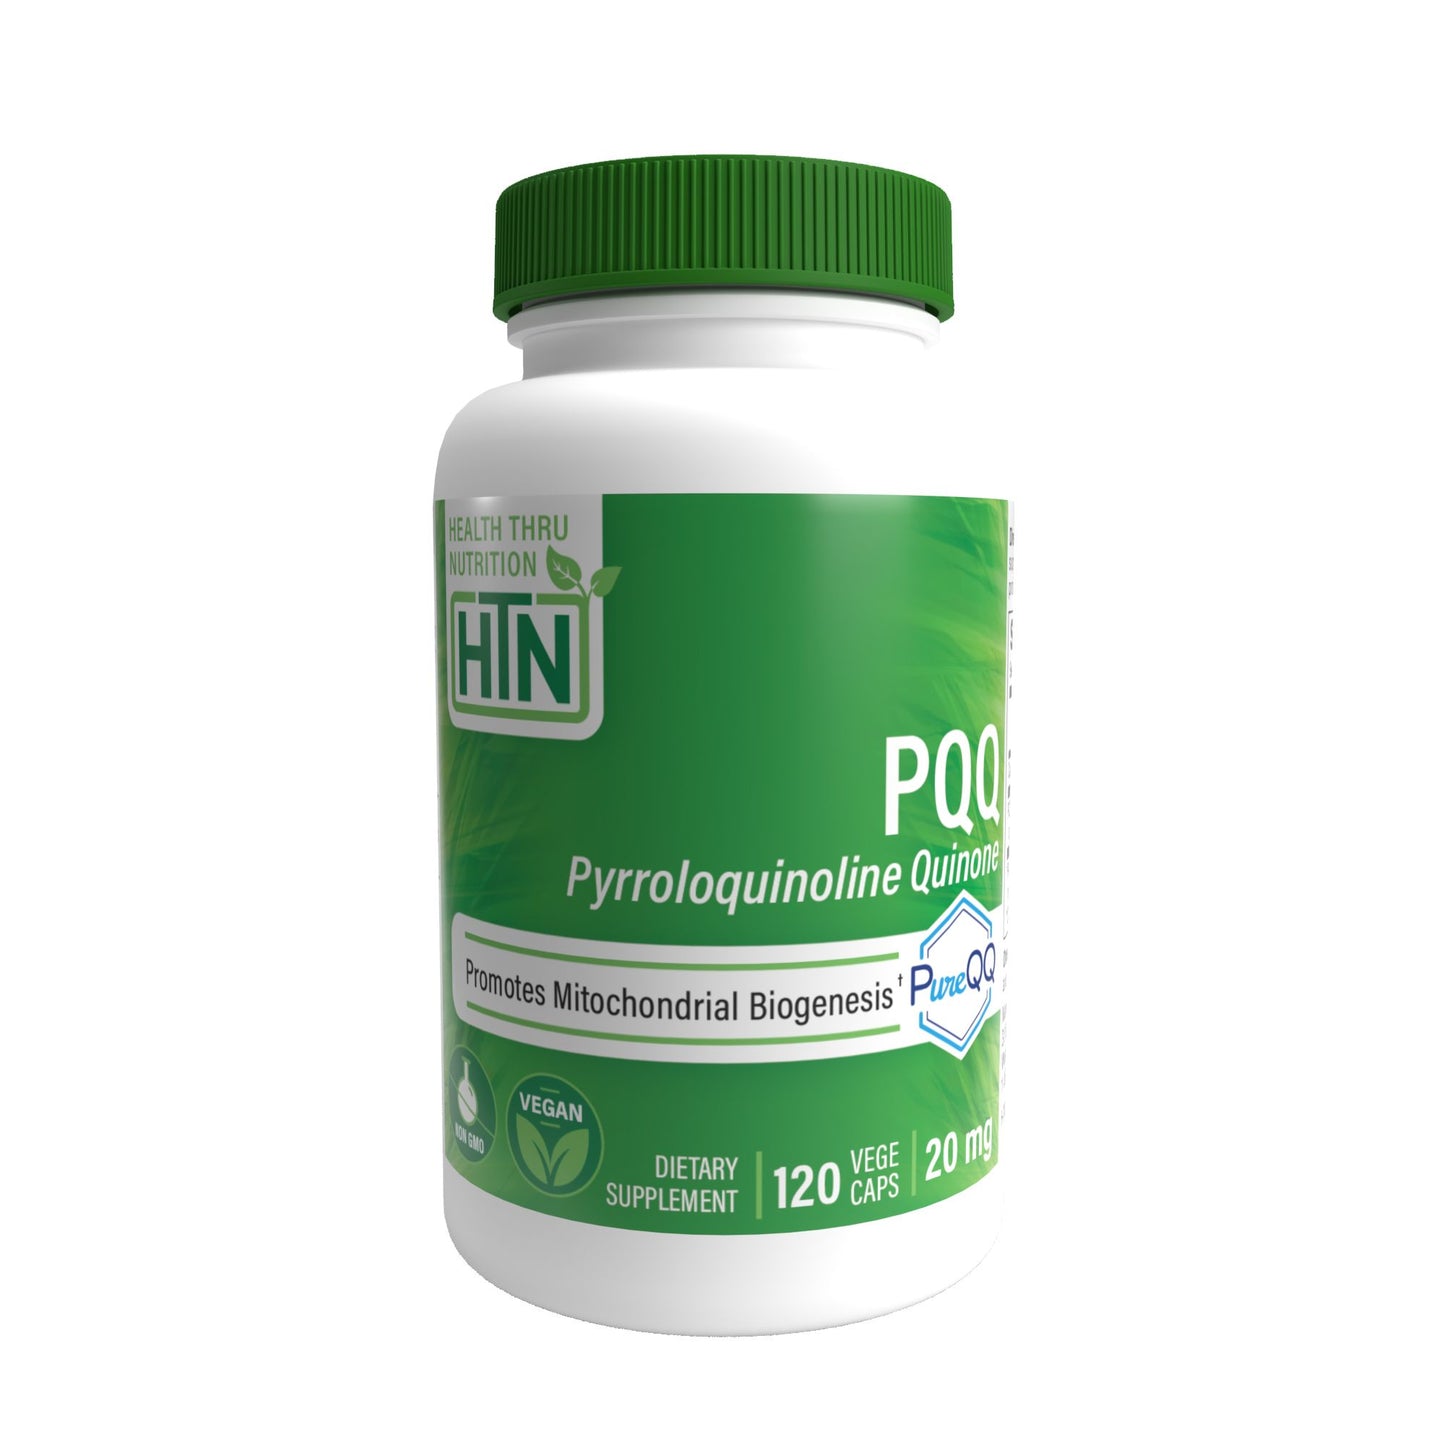 Health Thru Nutrition PQQ Pyrroloquinoline Quinone (as PureQQ™) 20mg (NON-GMO) 120 Vegecaps Promotes Mitochondrial Biogenesis